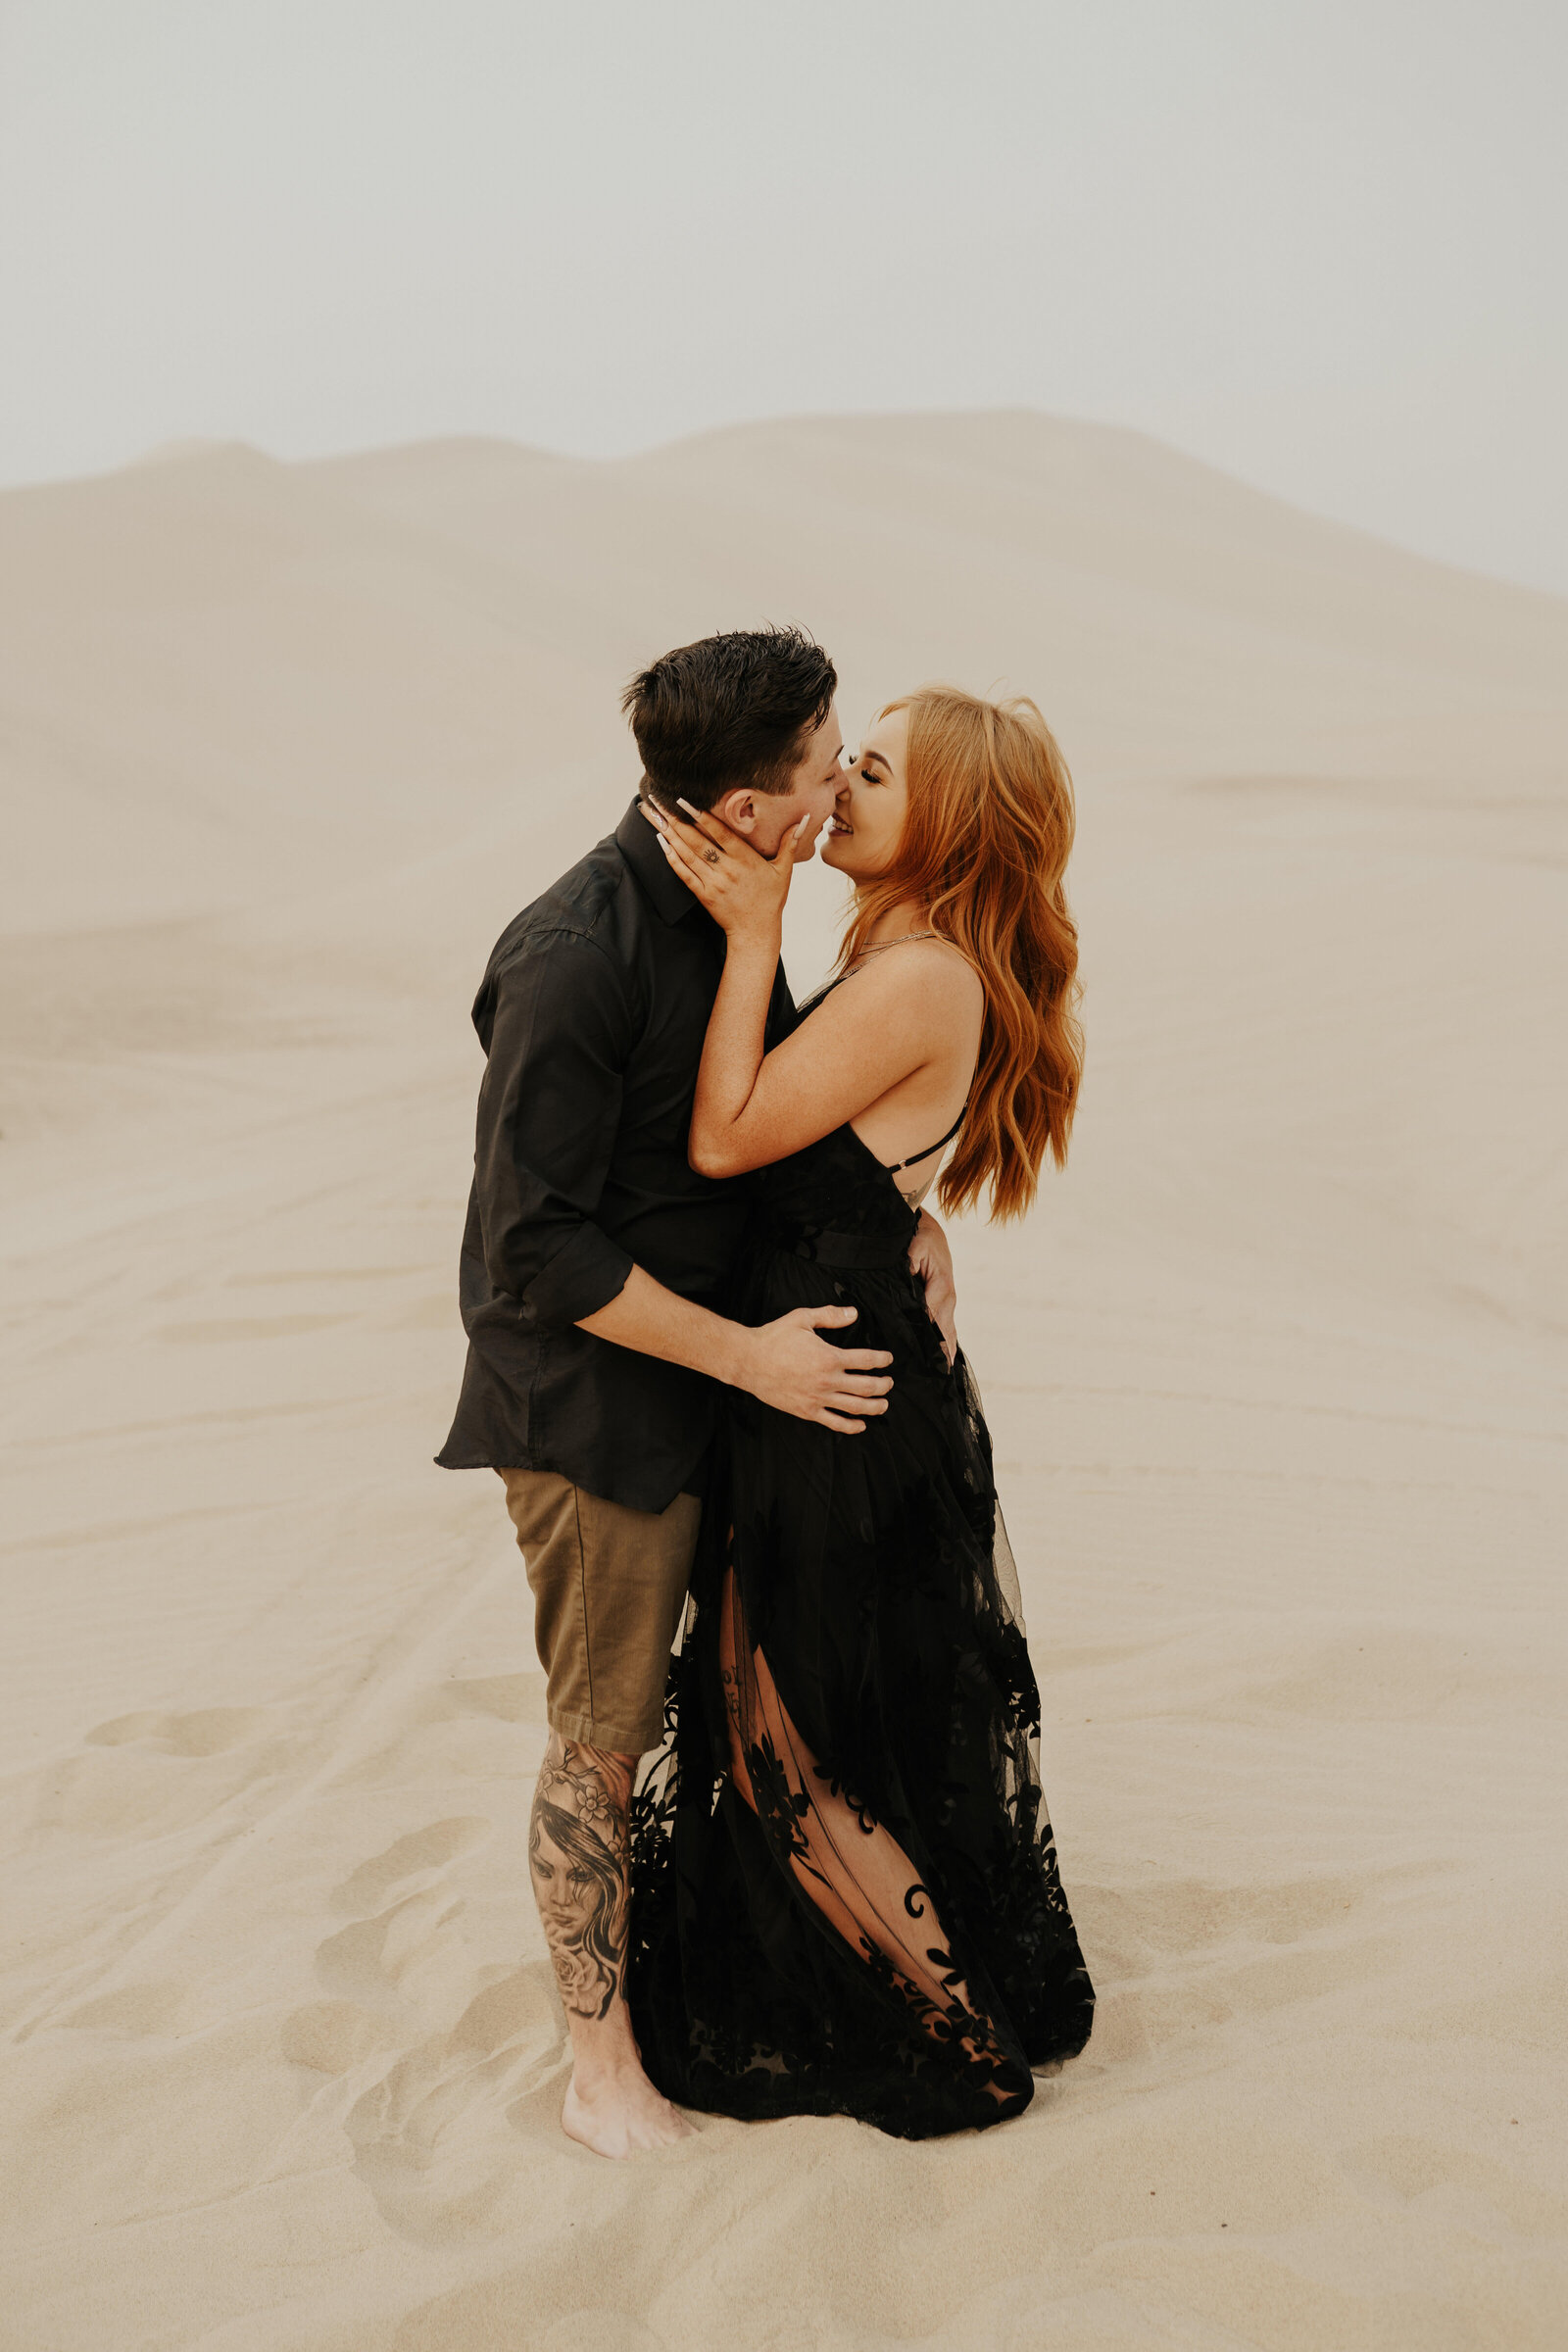 Sand Dunes Couples Photos - Raquel King Photography3